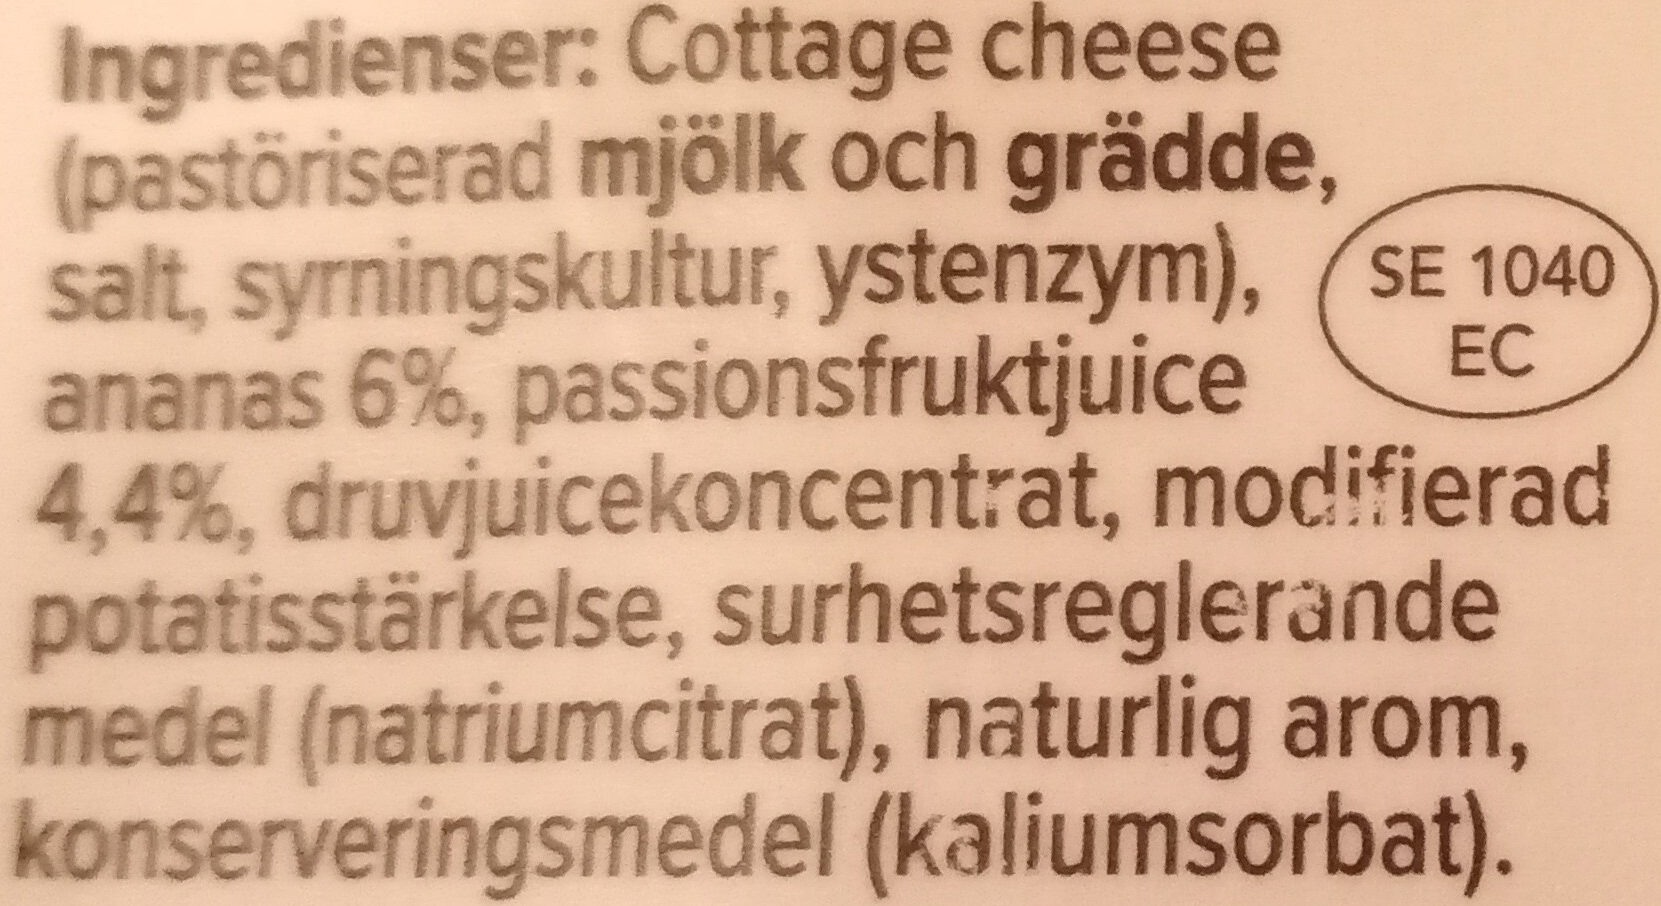 KESO Cottage Cheese Ananas/passion - Ingredienser - sv